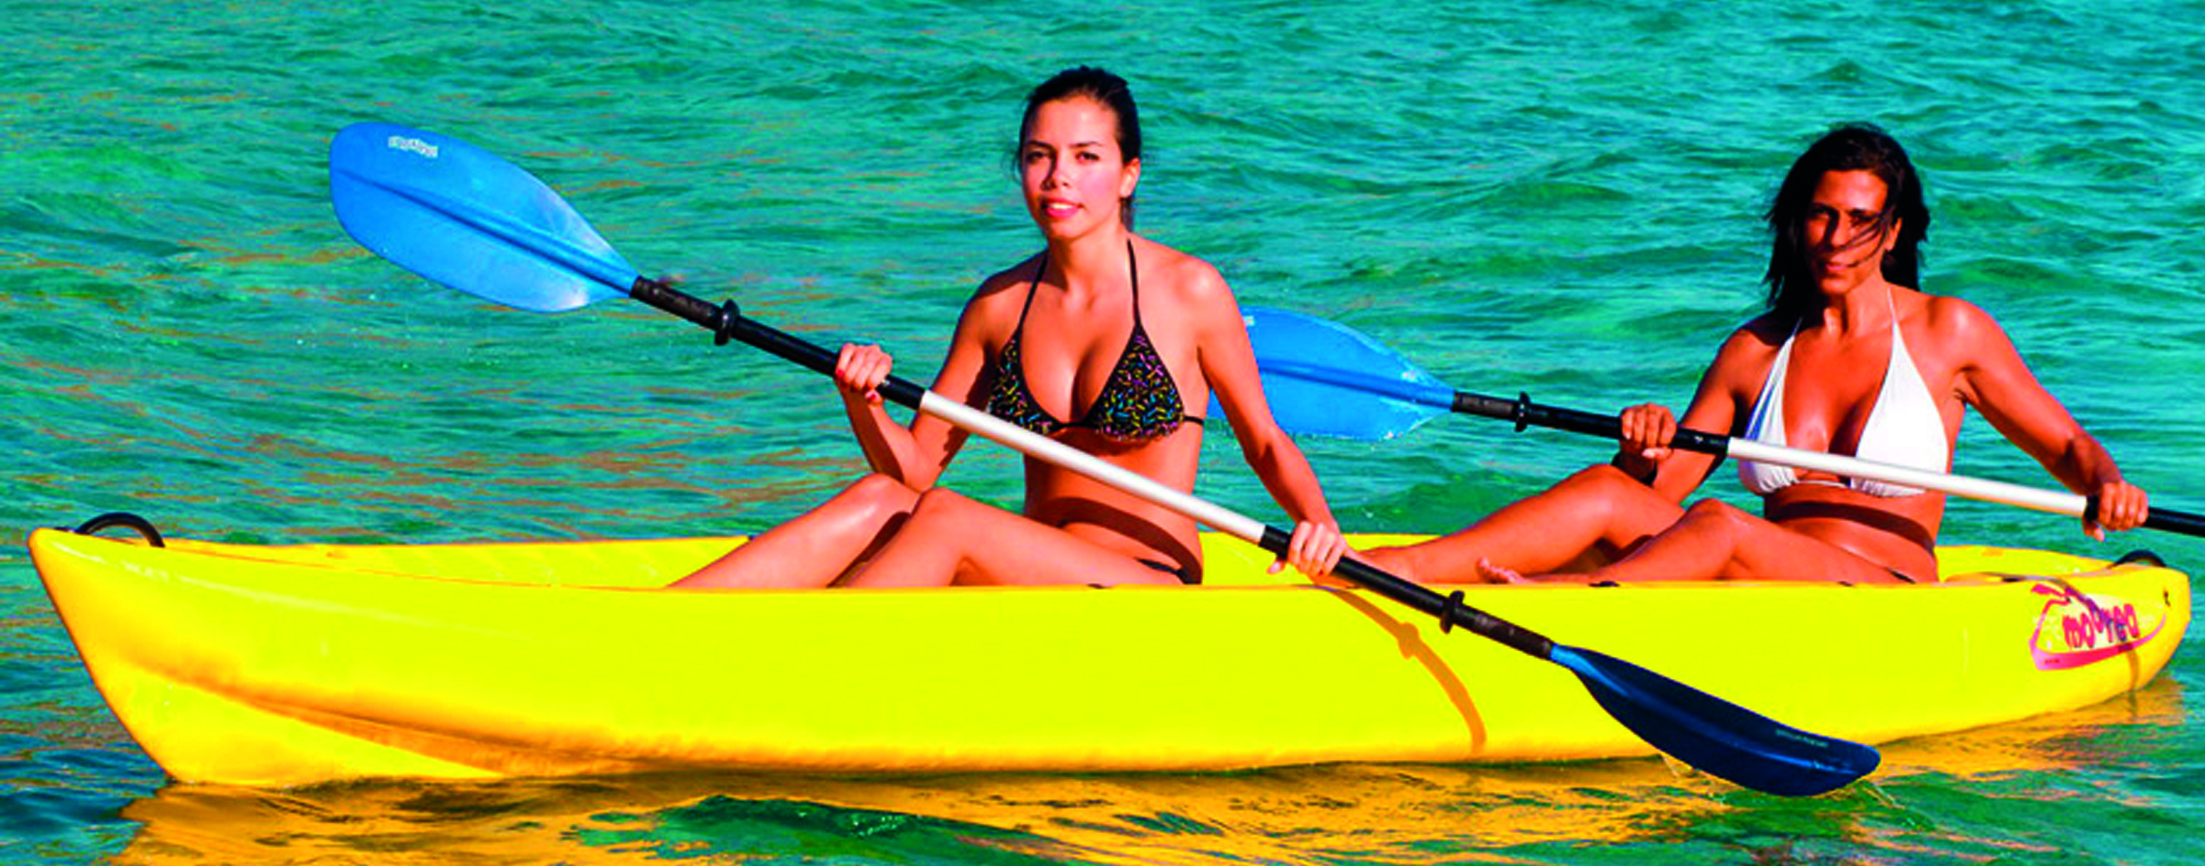 canoe rental water sport giulia andrea